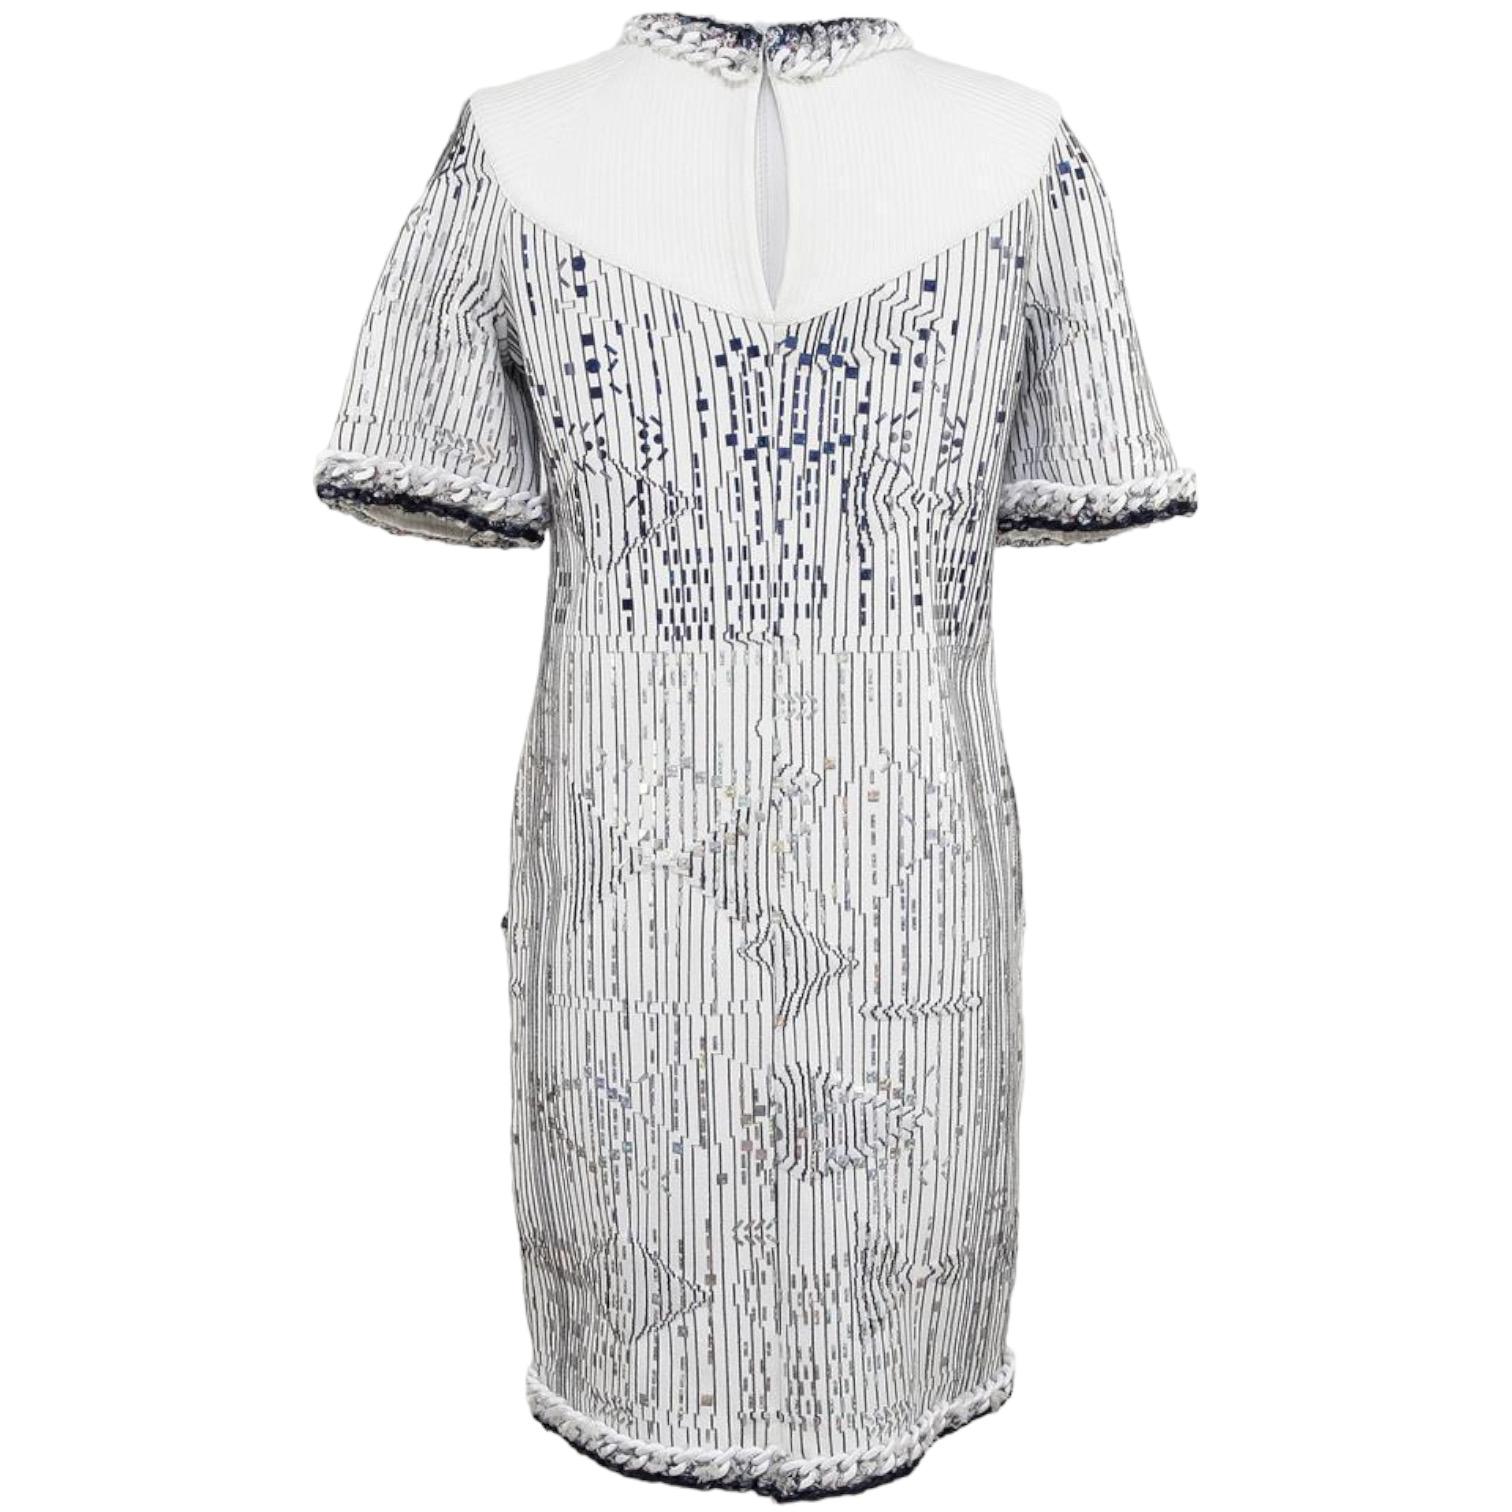 CHANEL Sweater Dress White Knit Metallic Short Sleeve Silver Blue 14S 2014 Sz 40 For Sale 1